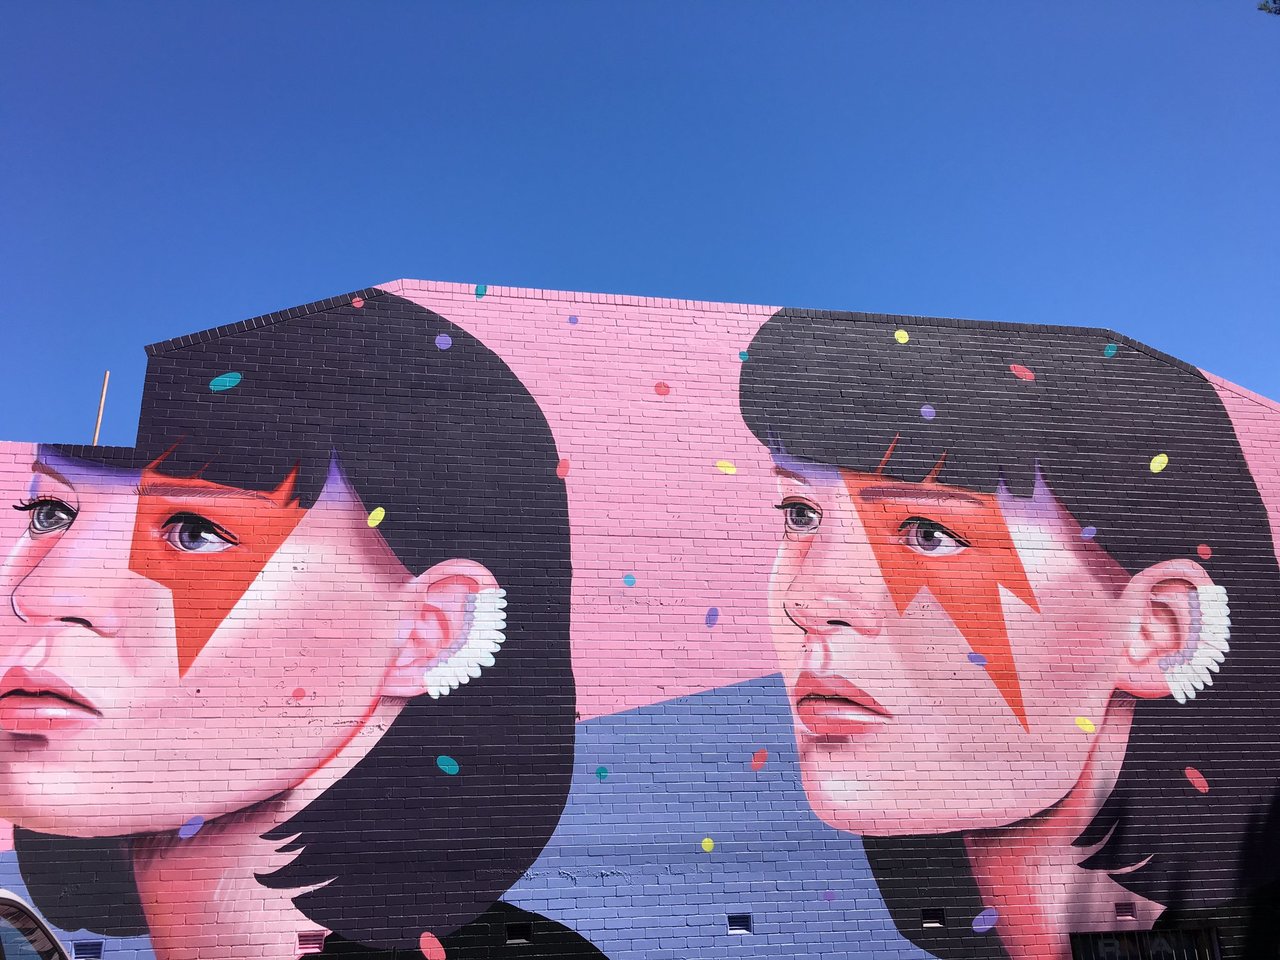 #LP writer in #Australia. RT @CristianBonetto: Toowoomba: an unexpected highlight for #streetart fans. #Queensland https://t.co/3GjSNjVRf6